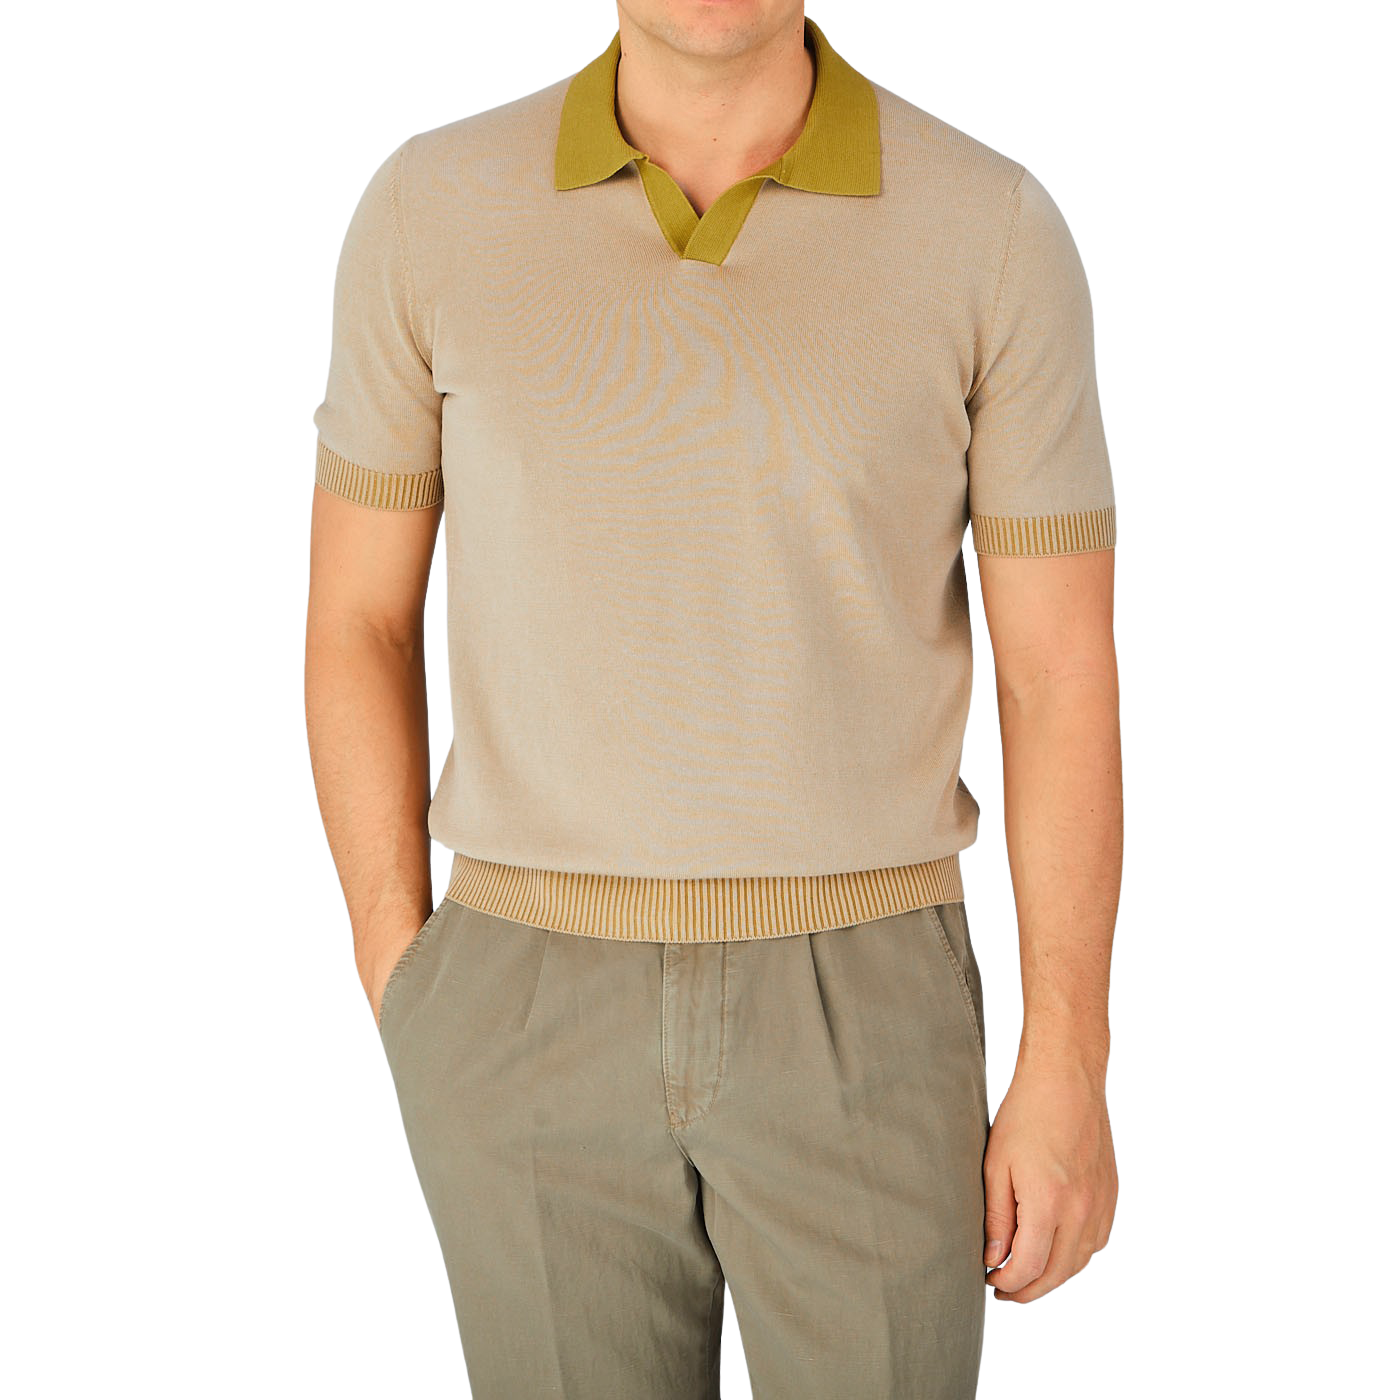 A man wearing a Gran Sasso Beige Cotton Contrast Collar Polo Shirt and khaki pants.